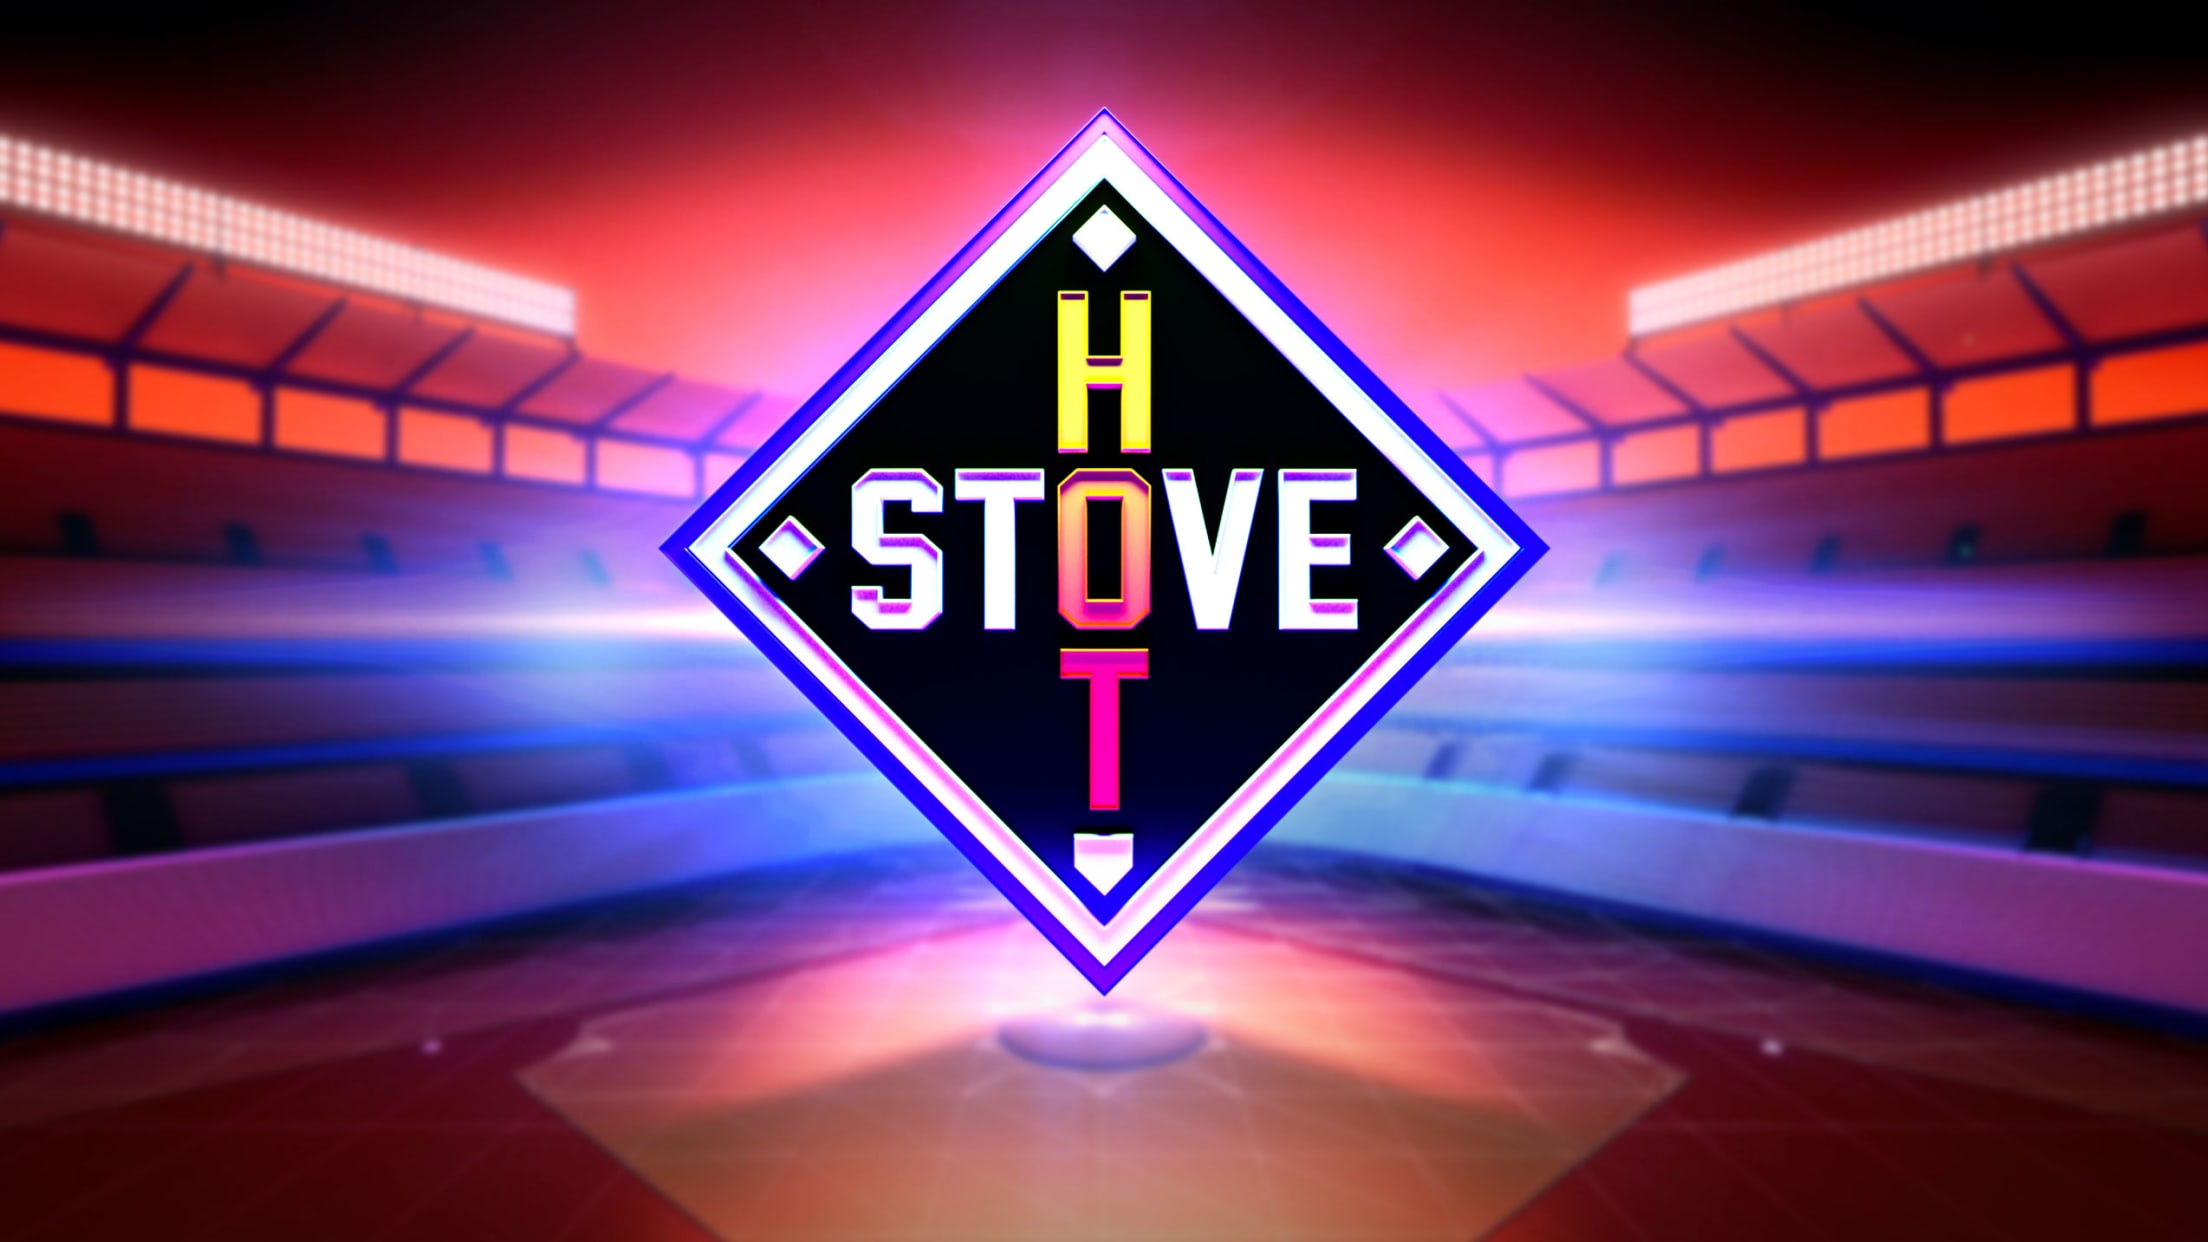 Hot Stove, MLB Network